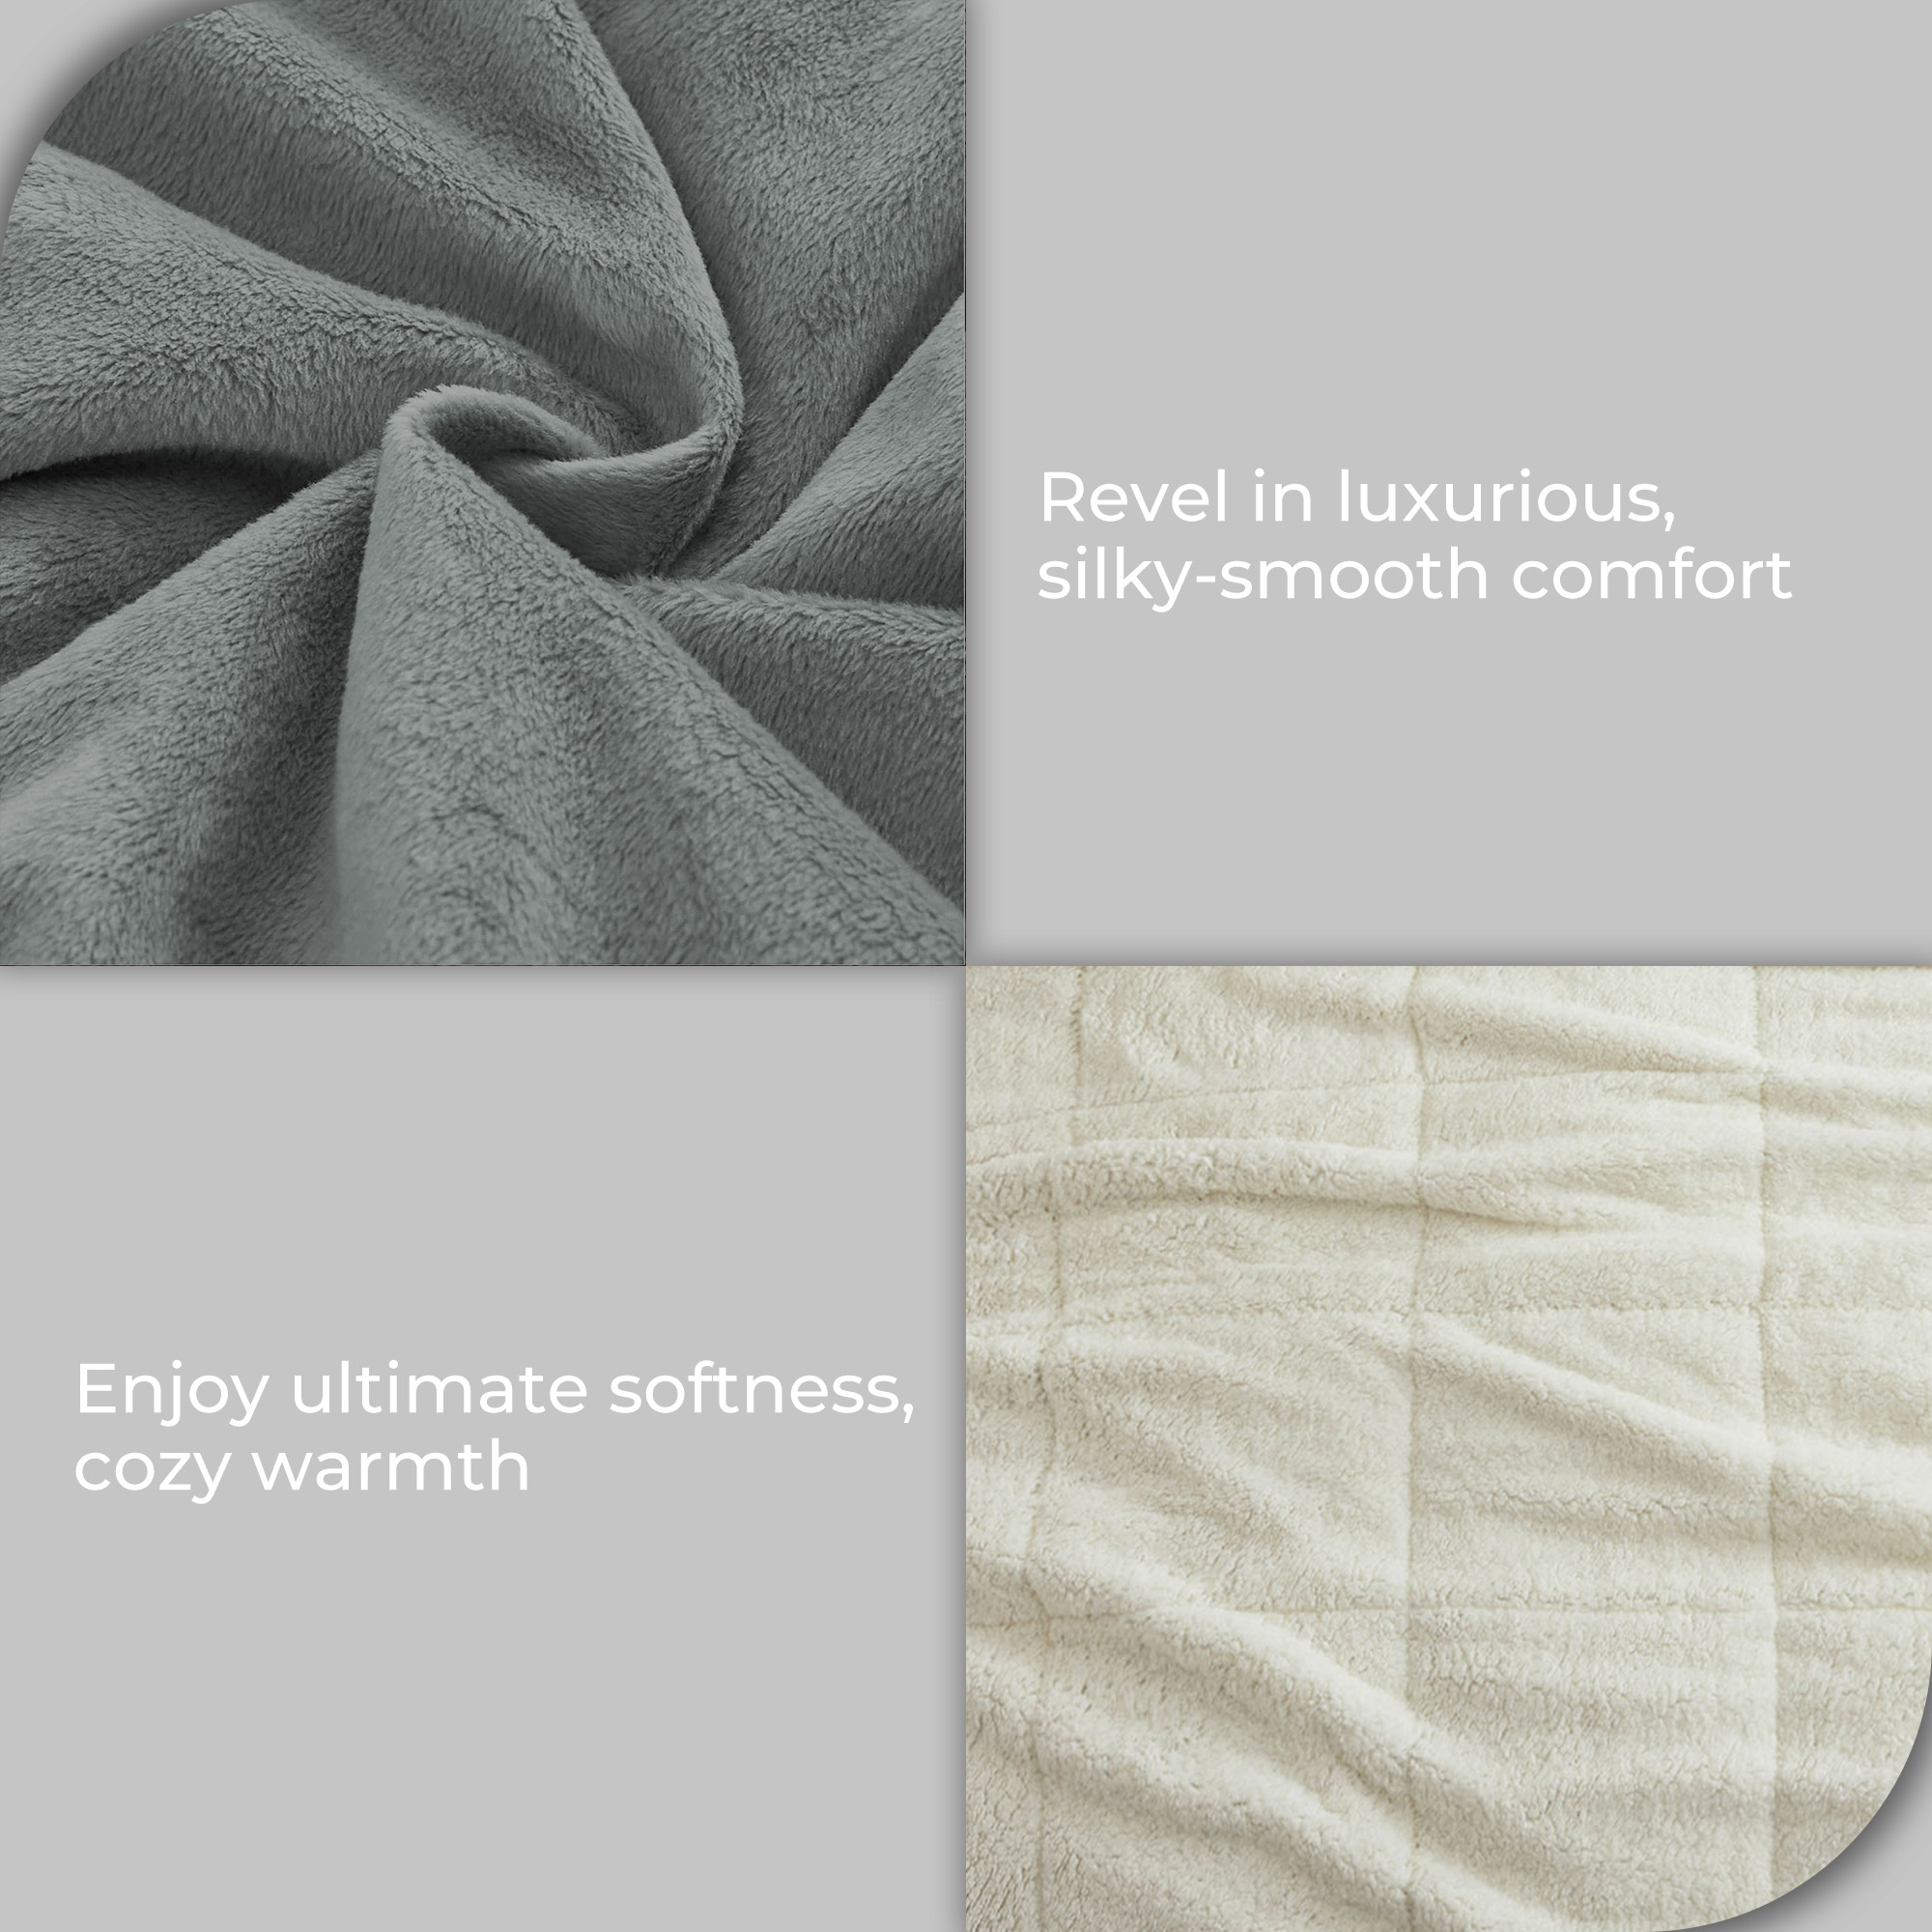 3 Piece Faux Fur Comforter Set, Soft Plush Velvet Fluffy Comfy Comforter Reversible Winter Comforter Set - Full/Queen Size